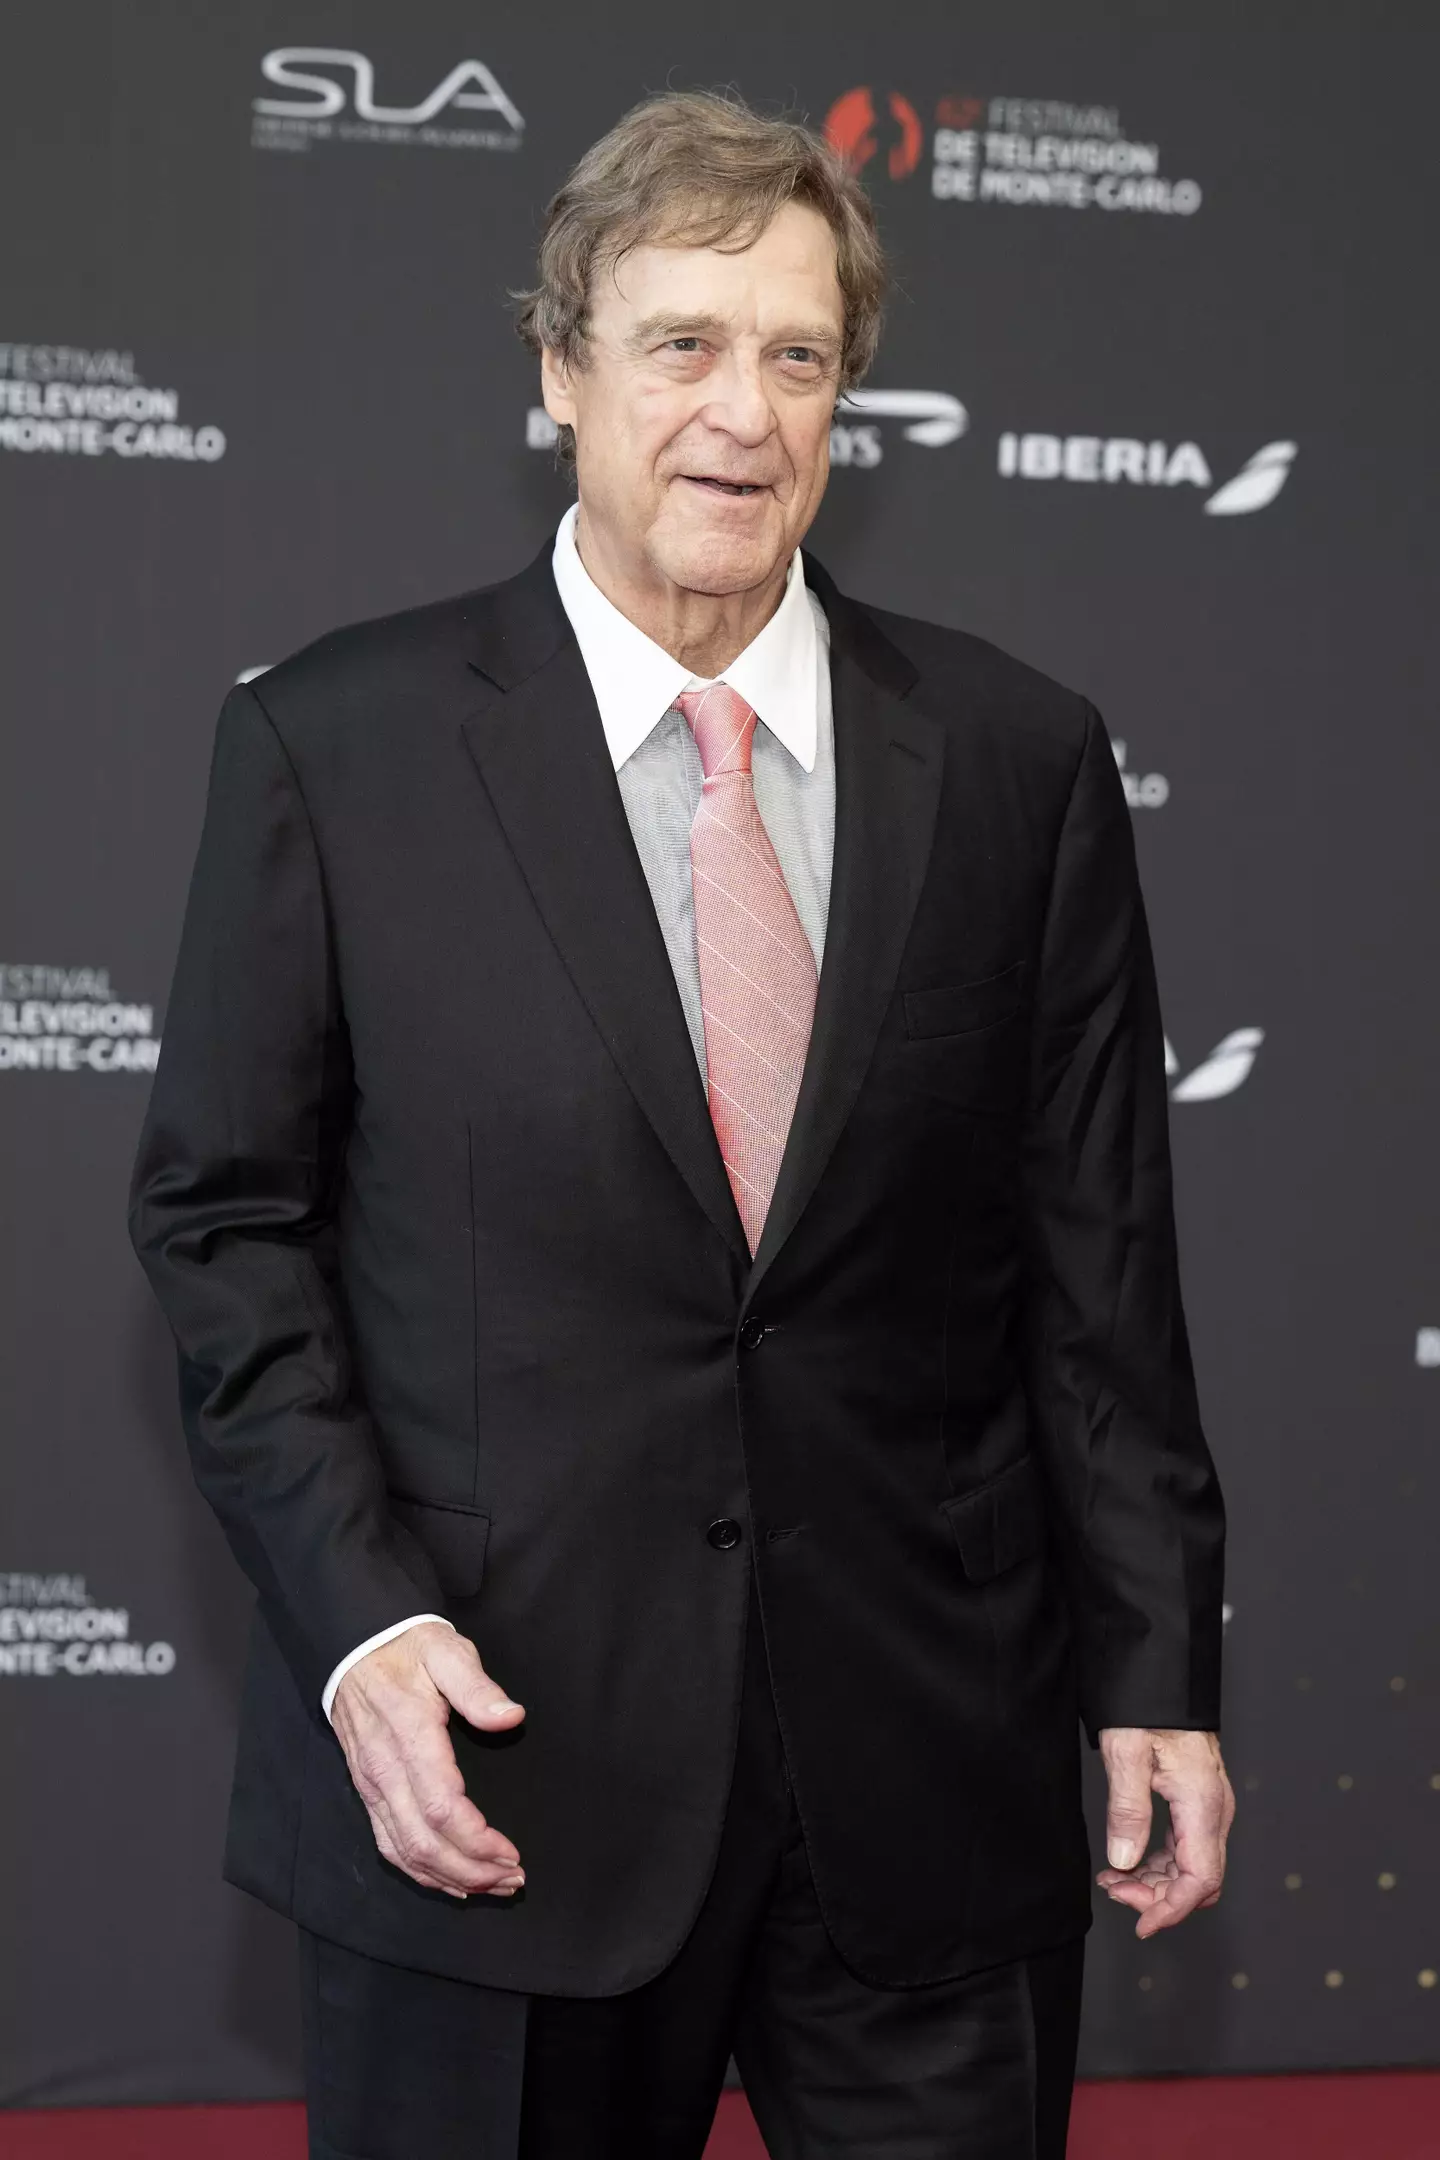 John Goodman at the event in Monaco.